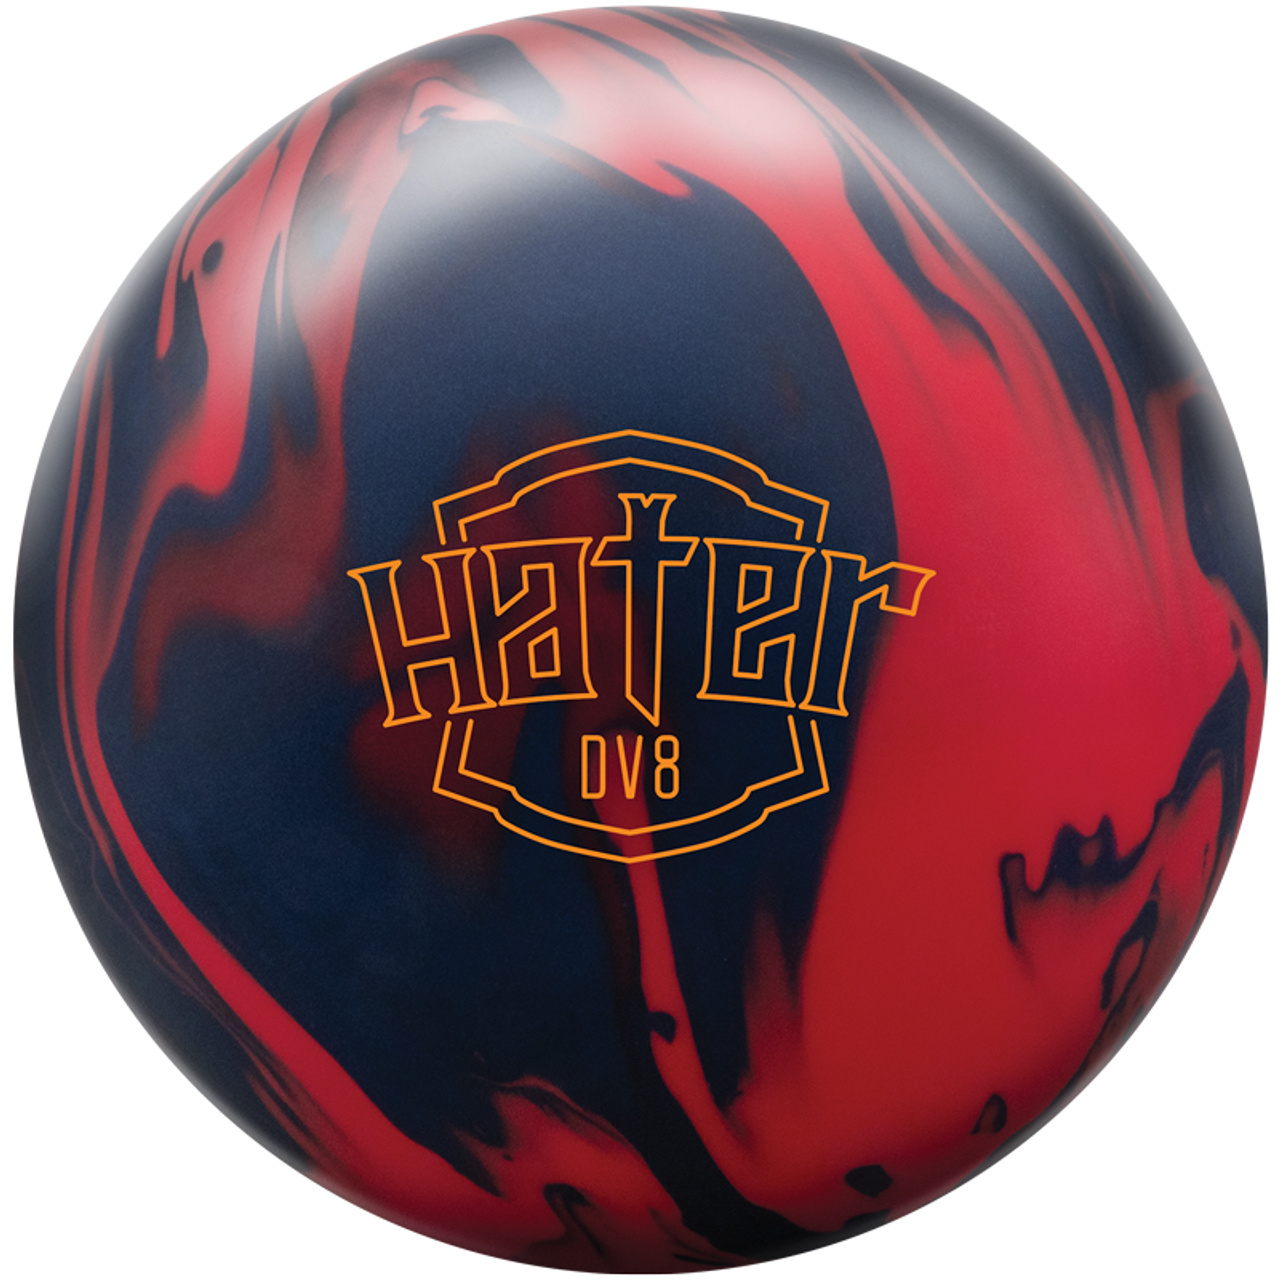 DV8 Hater Bowling Ball